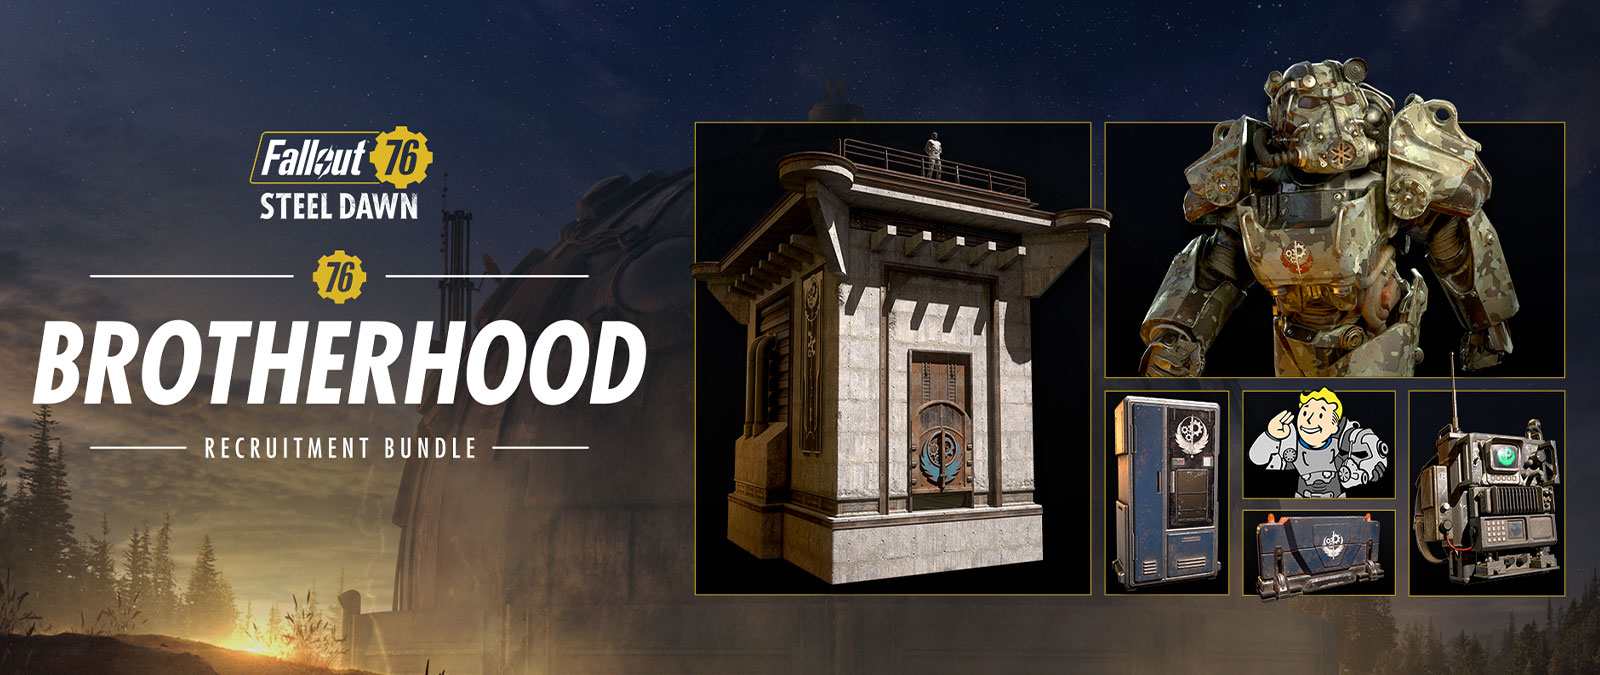 Fallout 76 Steel Dawn Brotherhood Recruitment-bundel, Power Armor, Scouting Tower en andere items